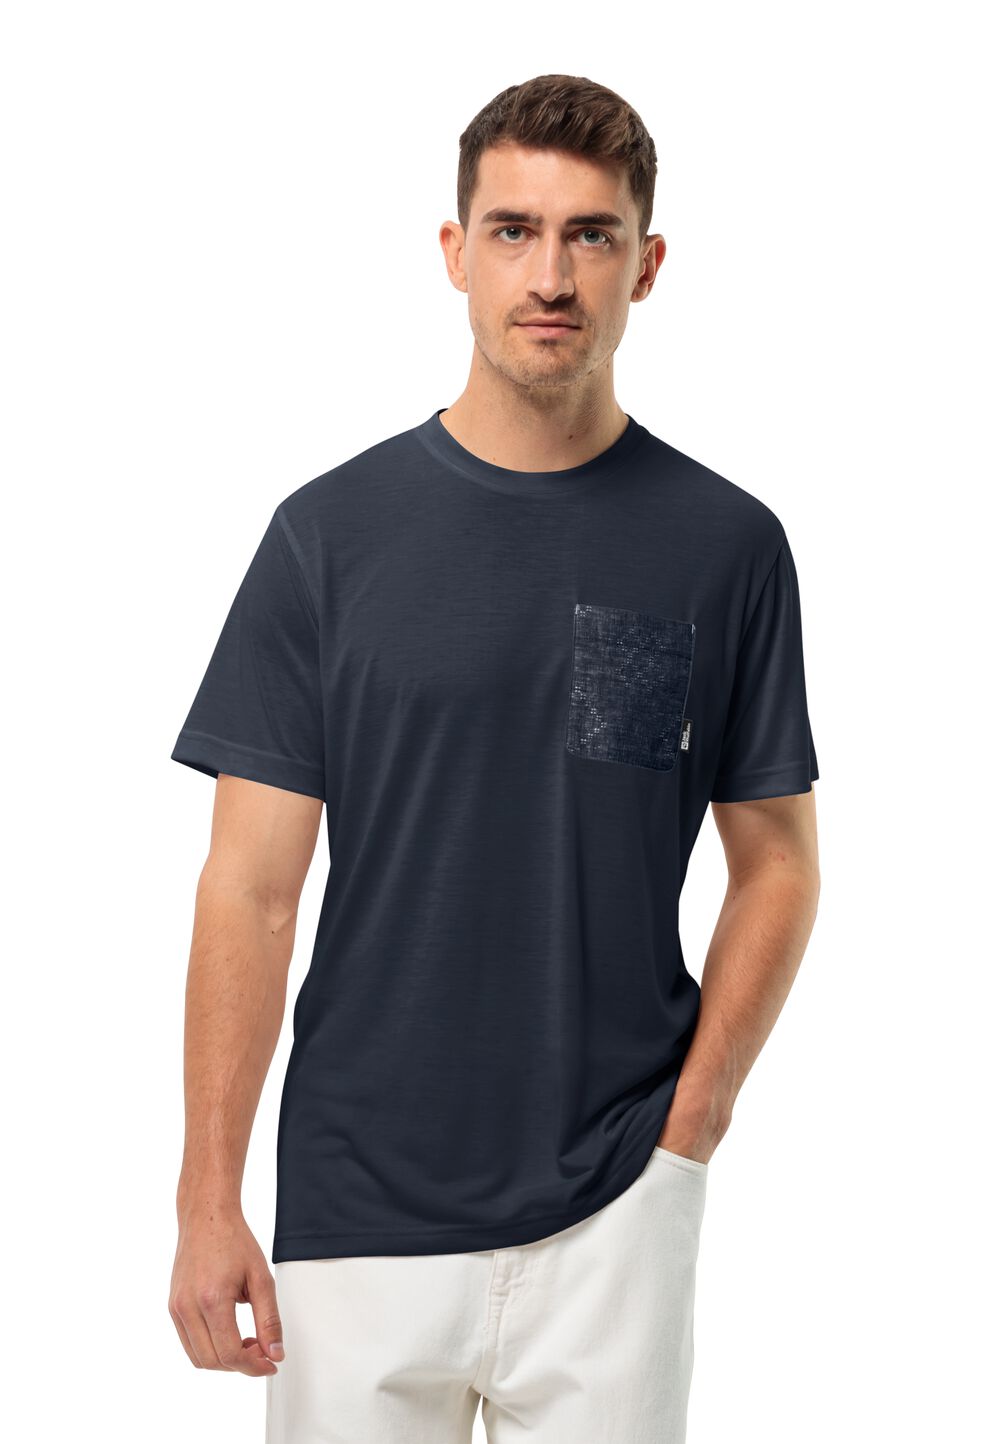 Jack Wolfskin Pocket Karana T-Shirt Men Functioneel shirt Heren S blue night blue